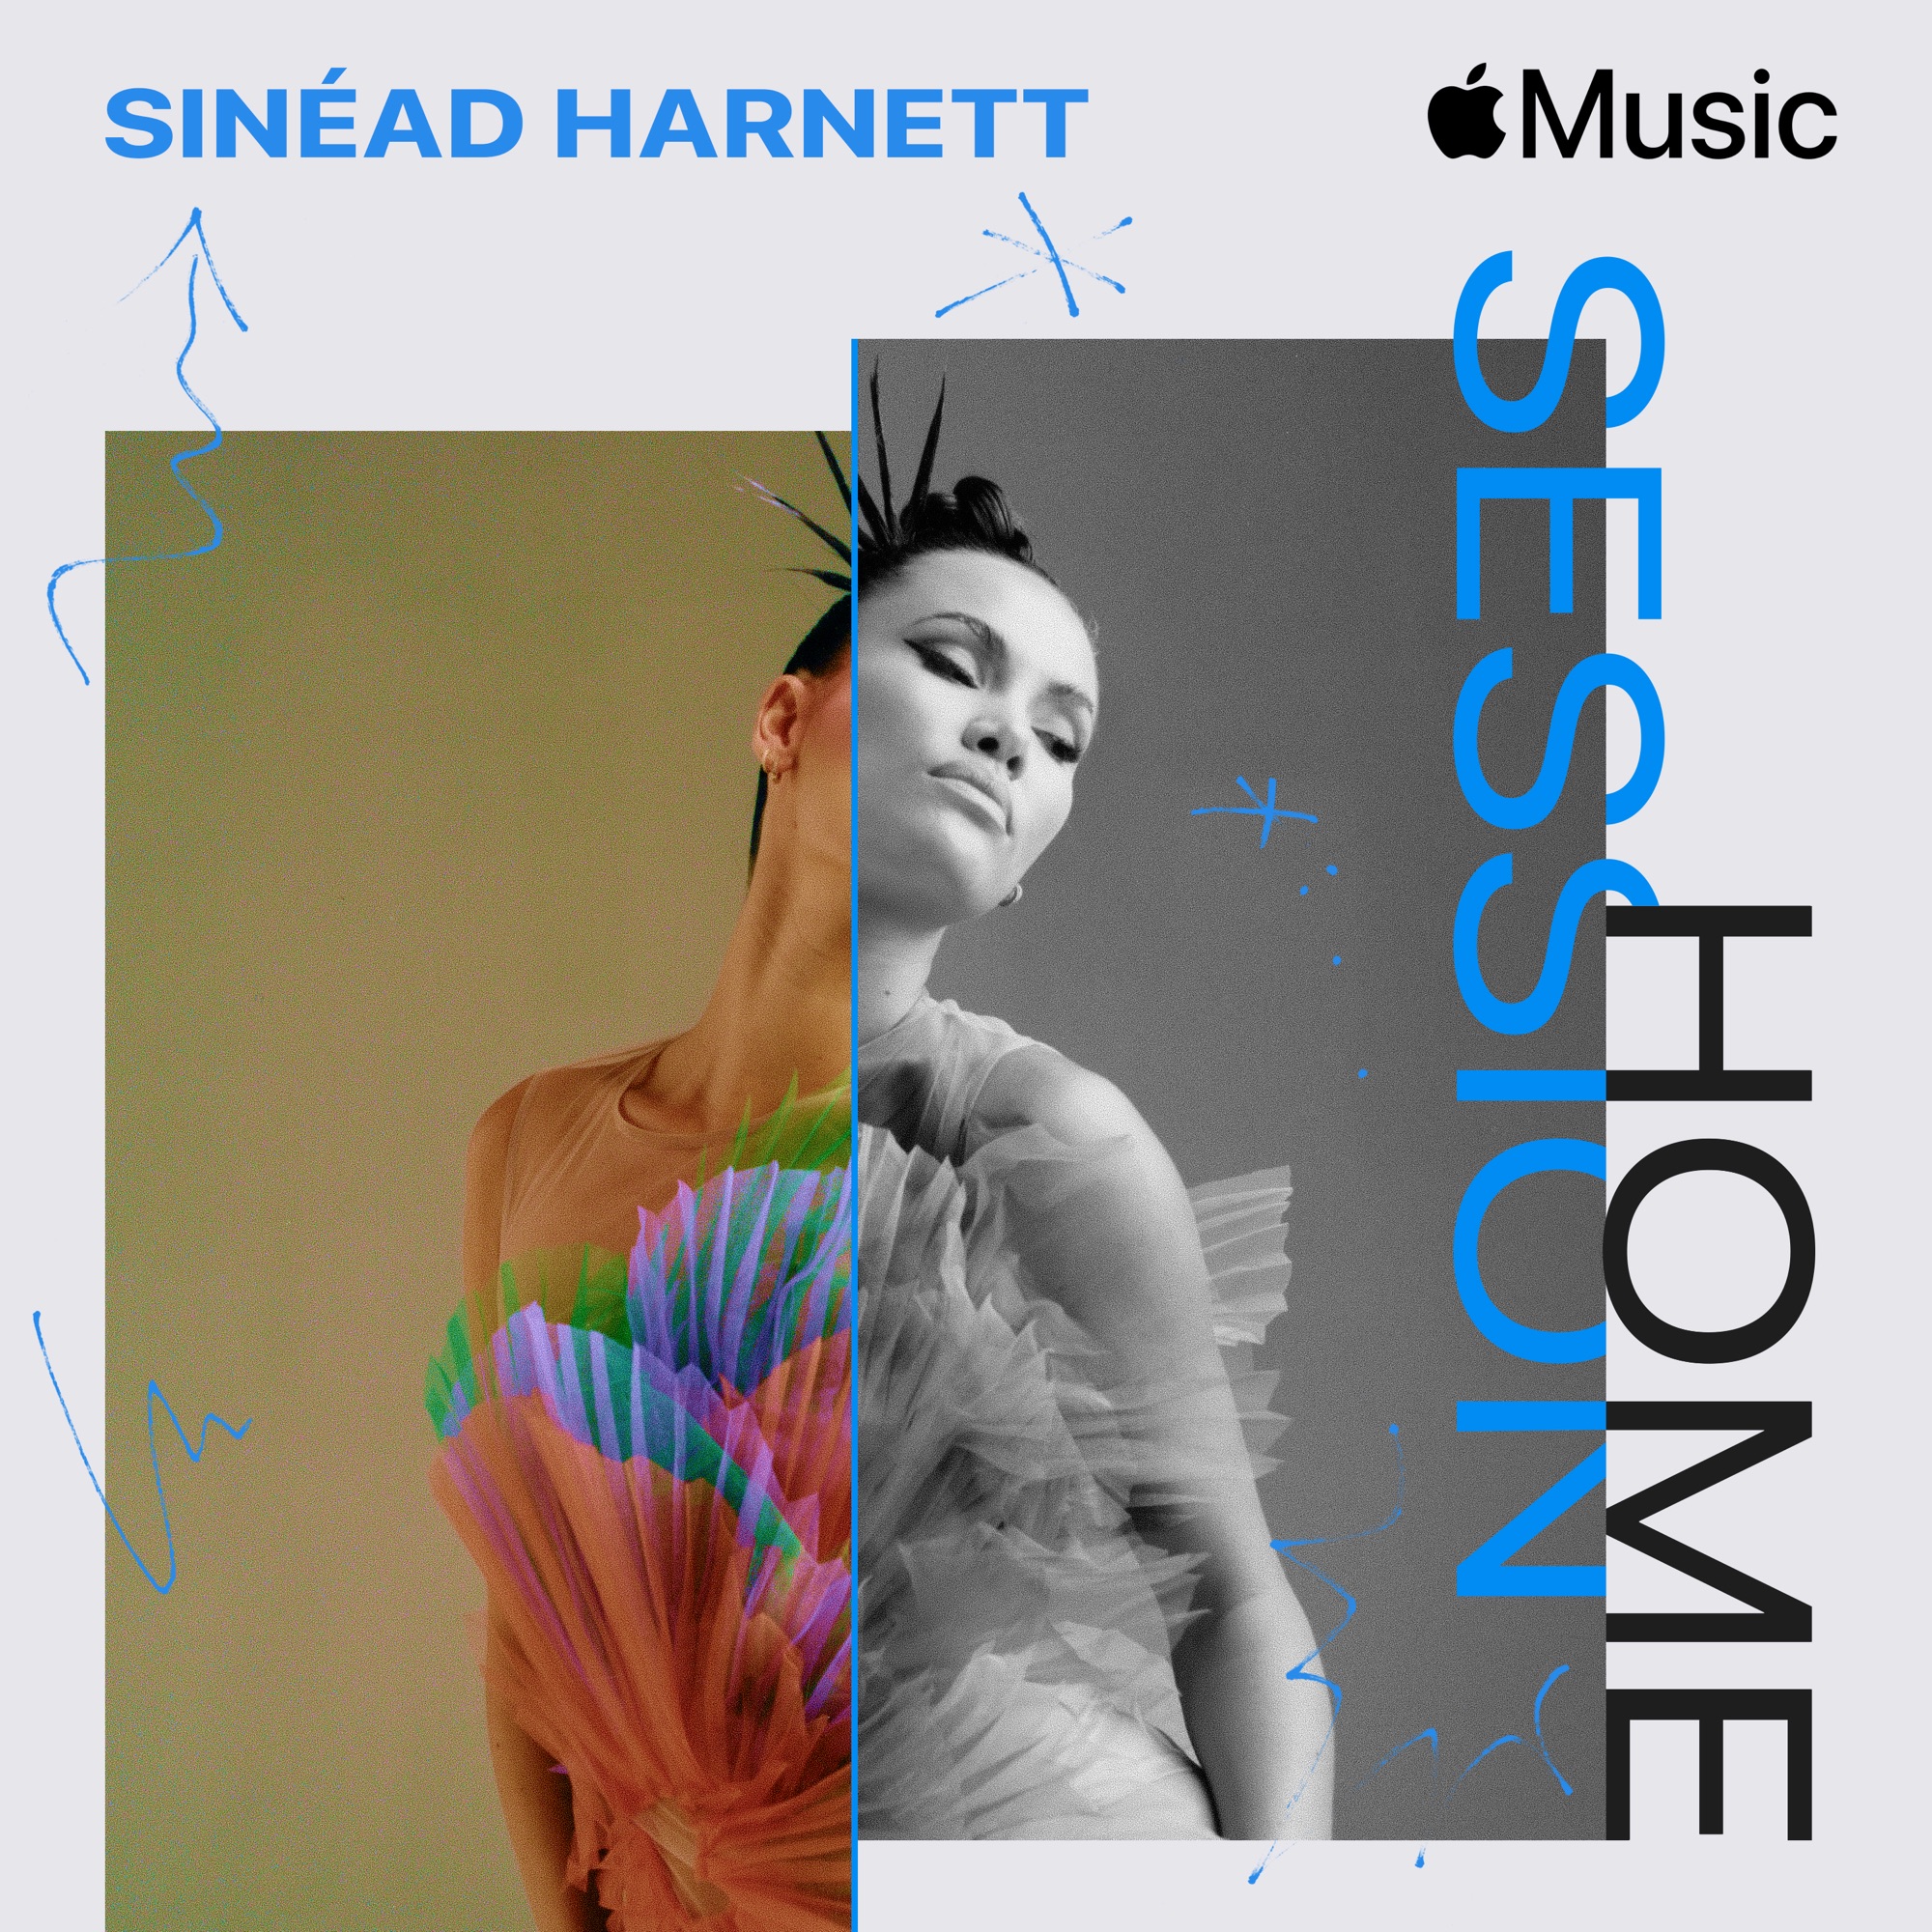 Sinead Harnett - Apple Music Home Session: Sinead Harnett - Single